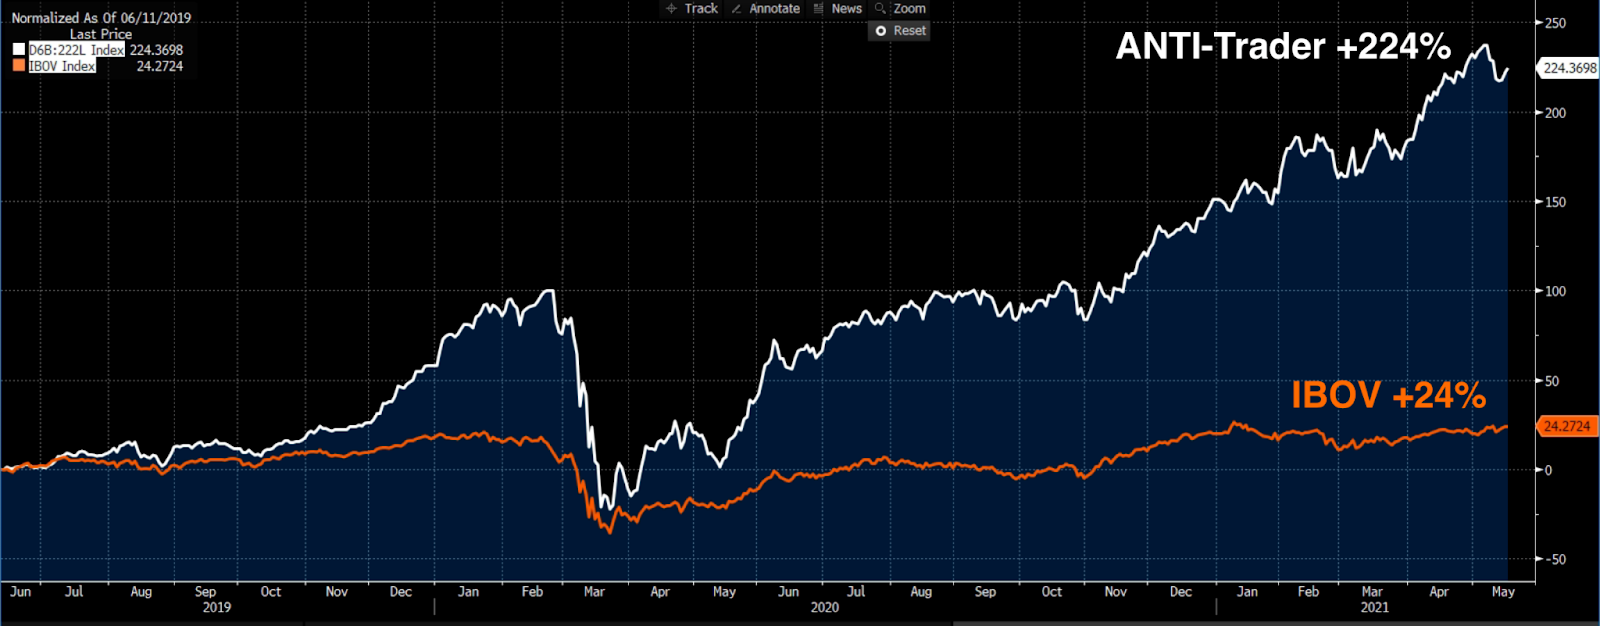 Gráfico apresenta Rentabilidade acumulada ANTI-Trader (branco) e Ibovespa (laranja) - desde jun/2019.